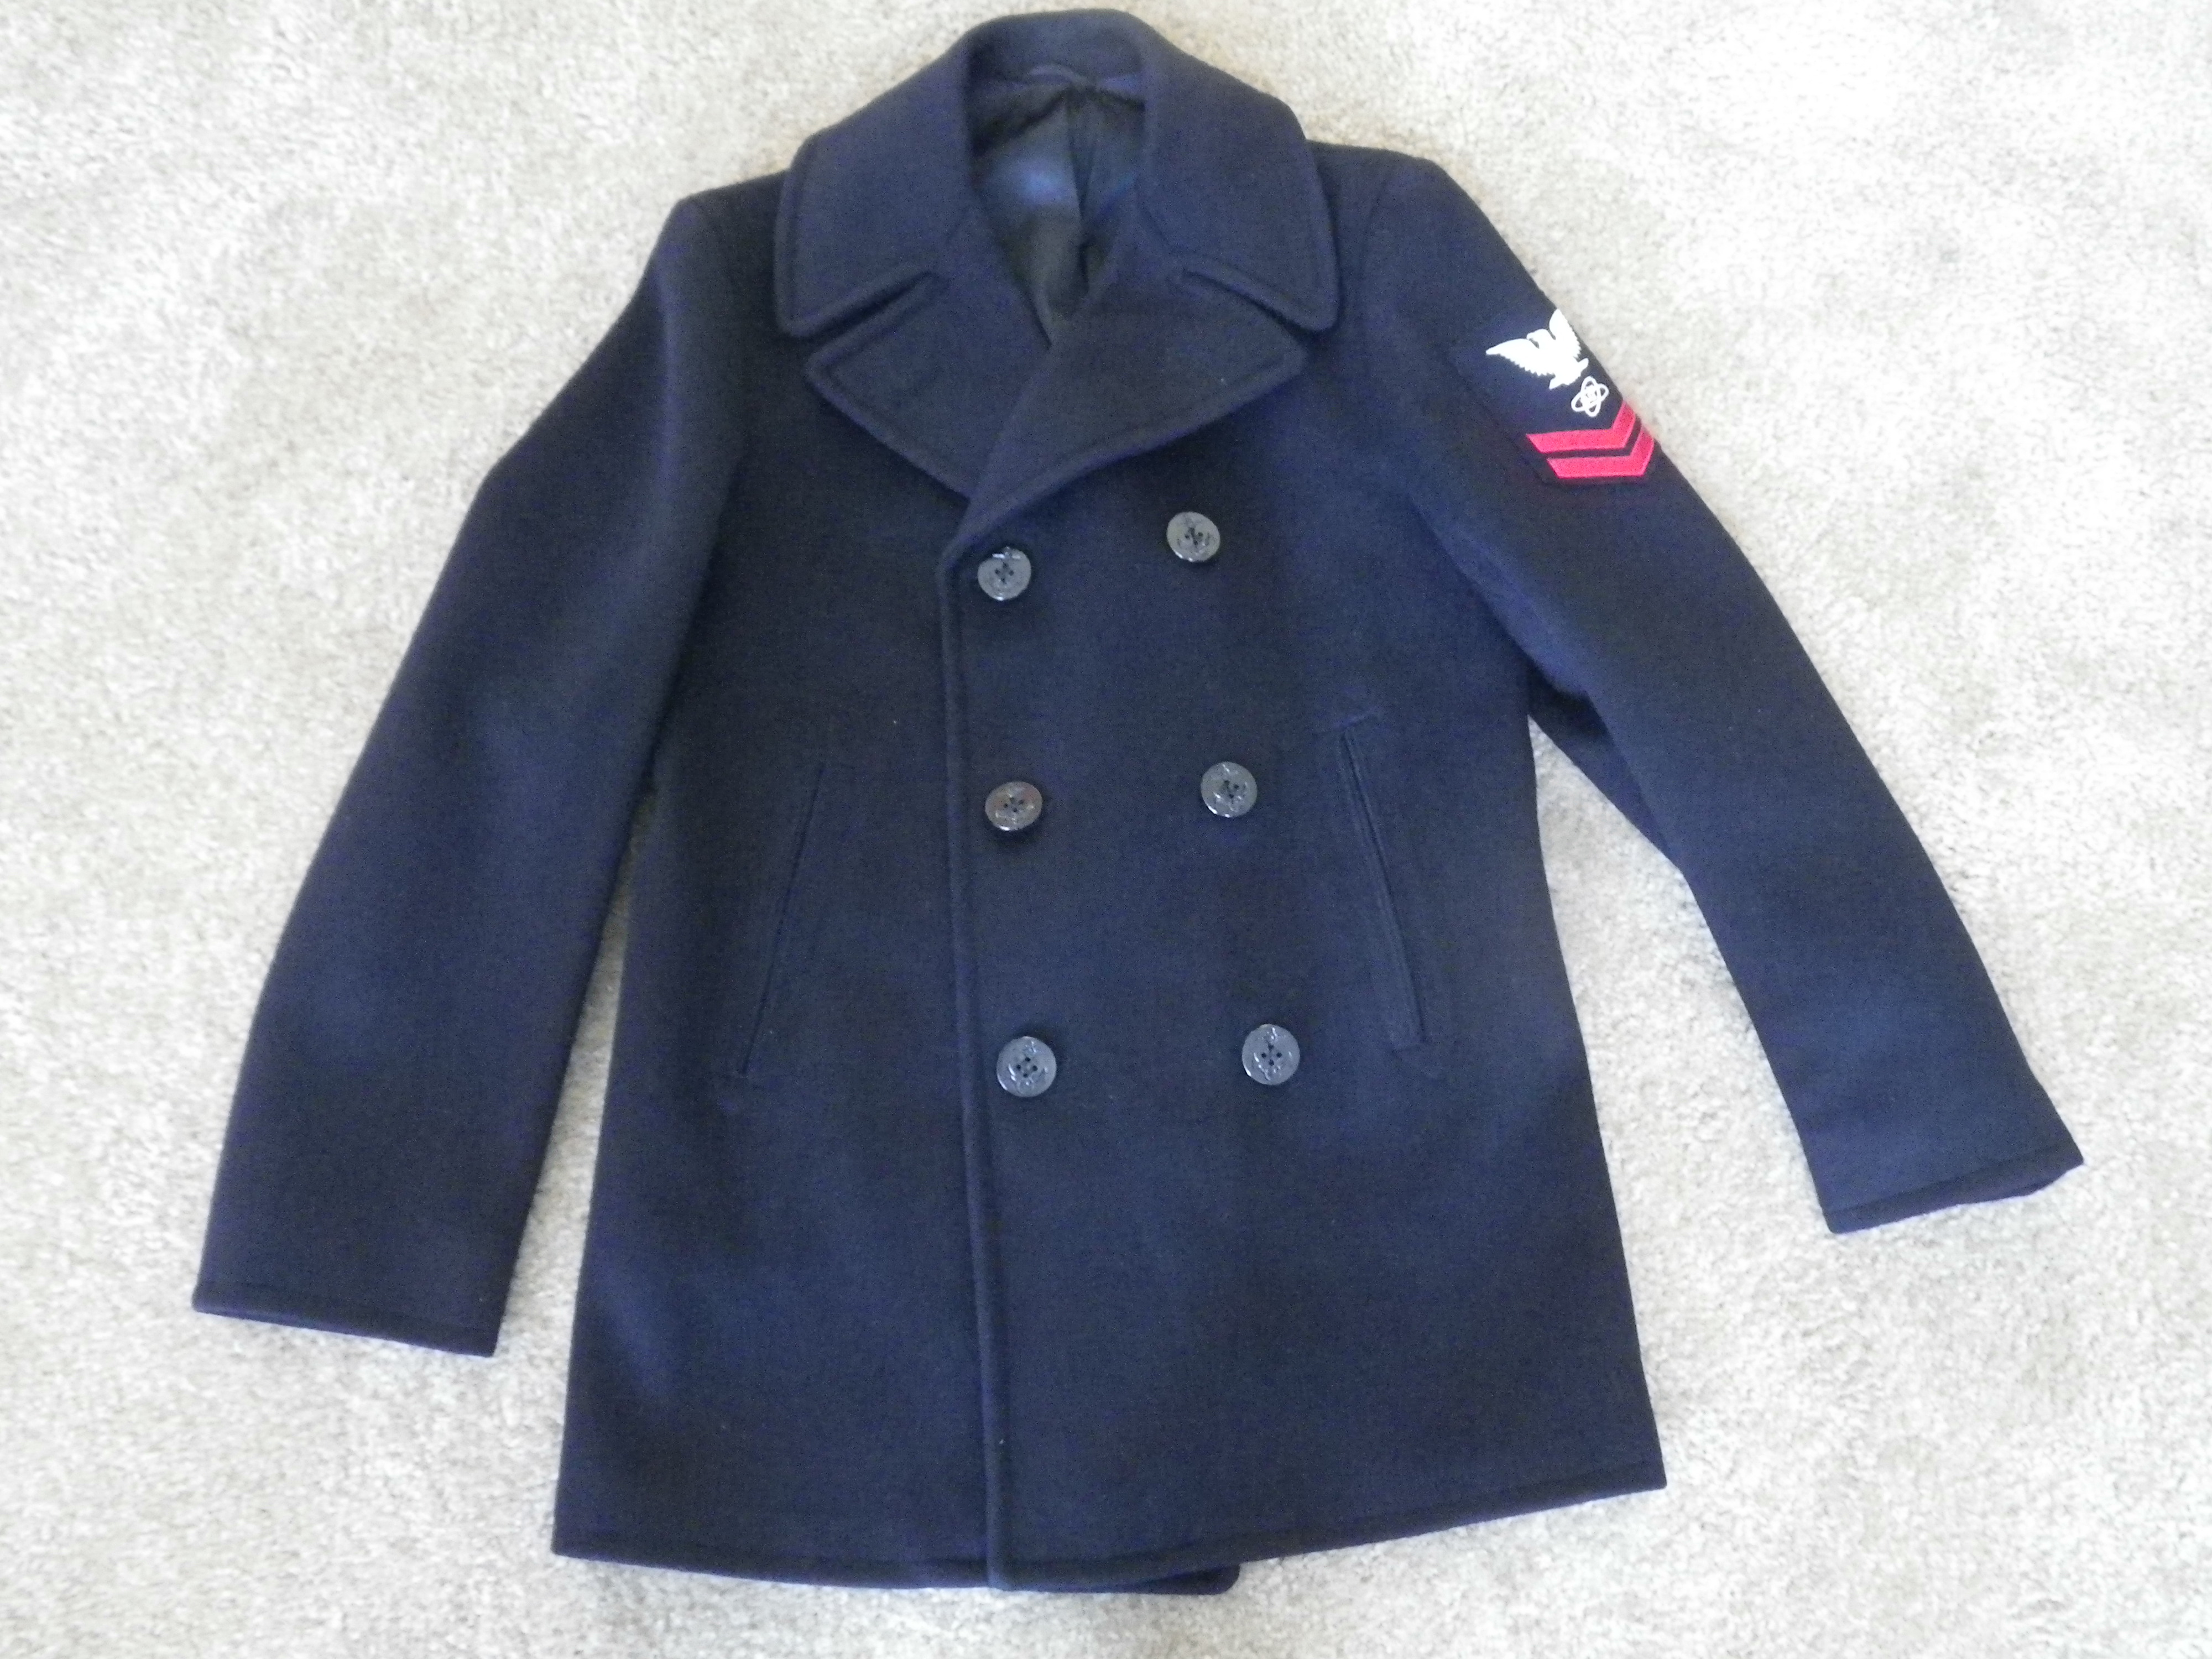 Needing Help dating a NAVY Pea Coat Please... - The eBay Community